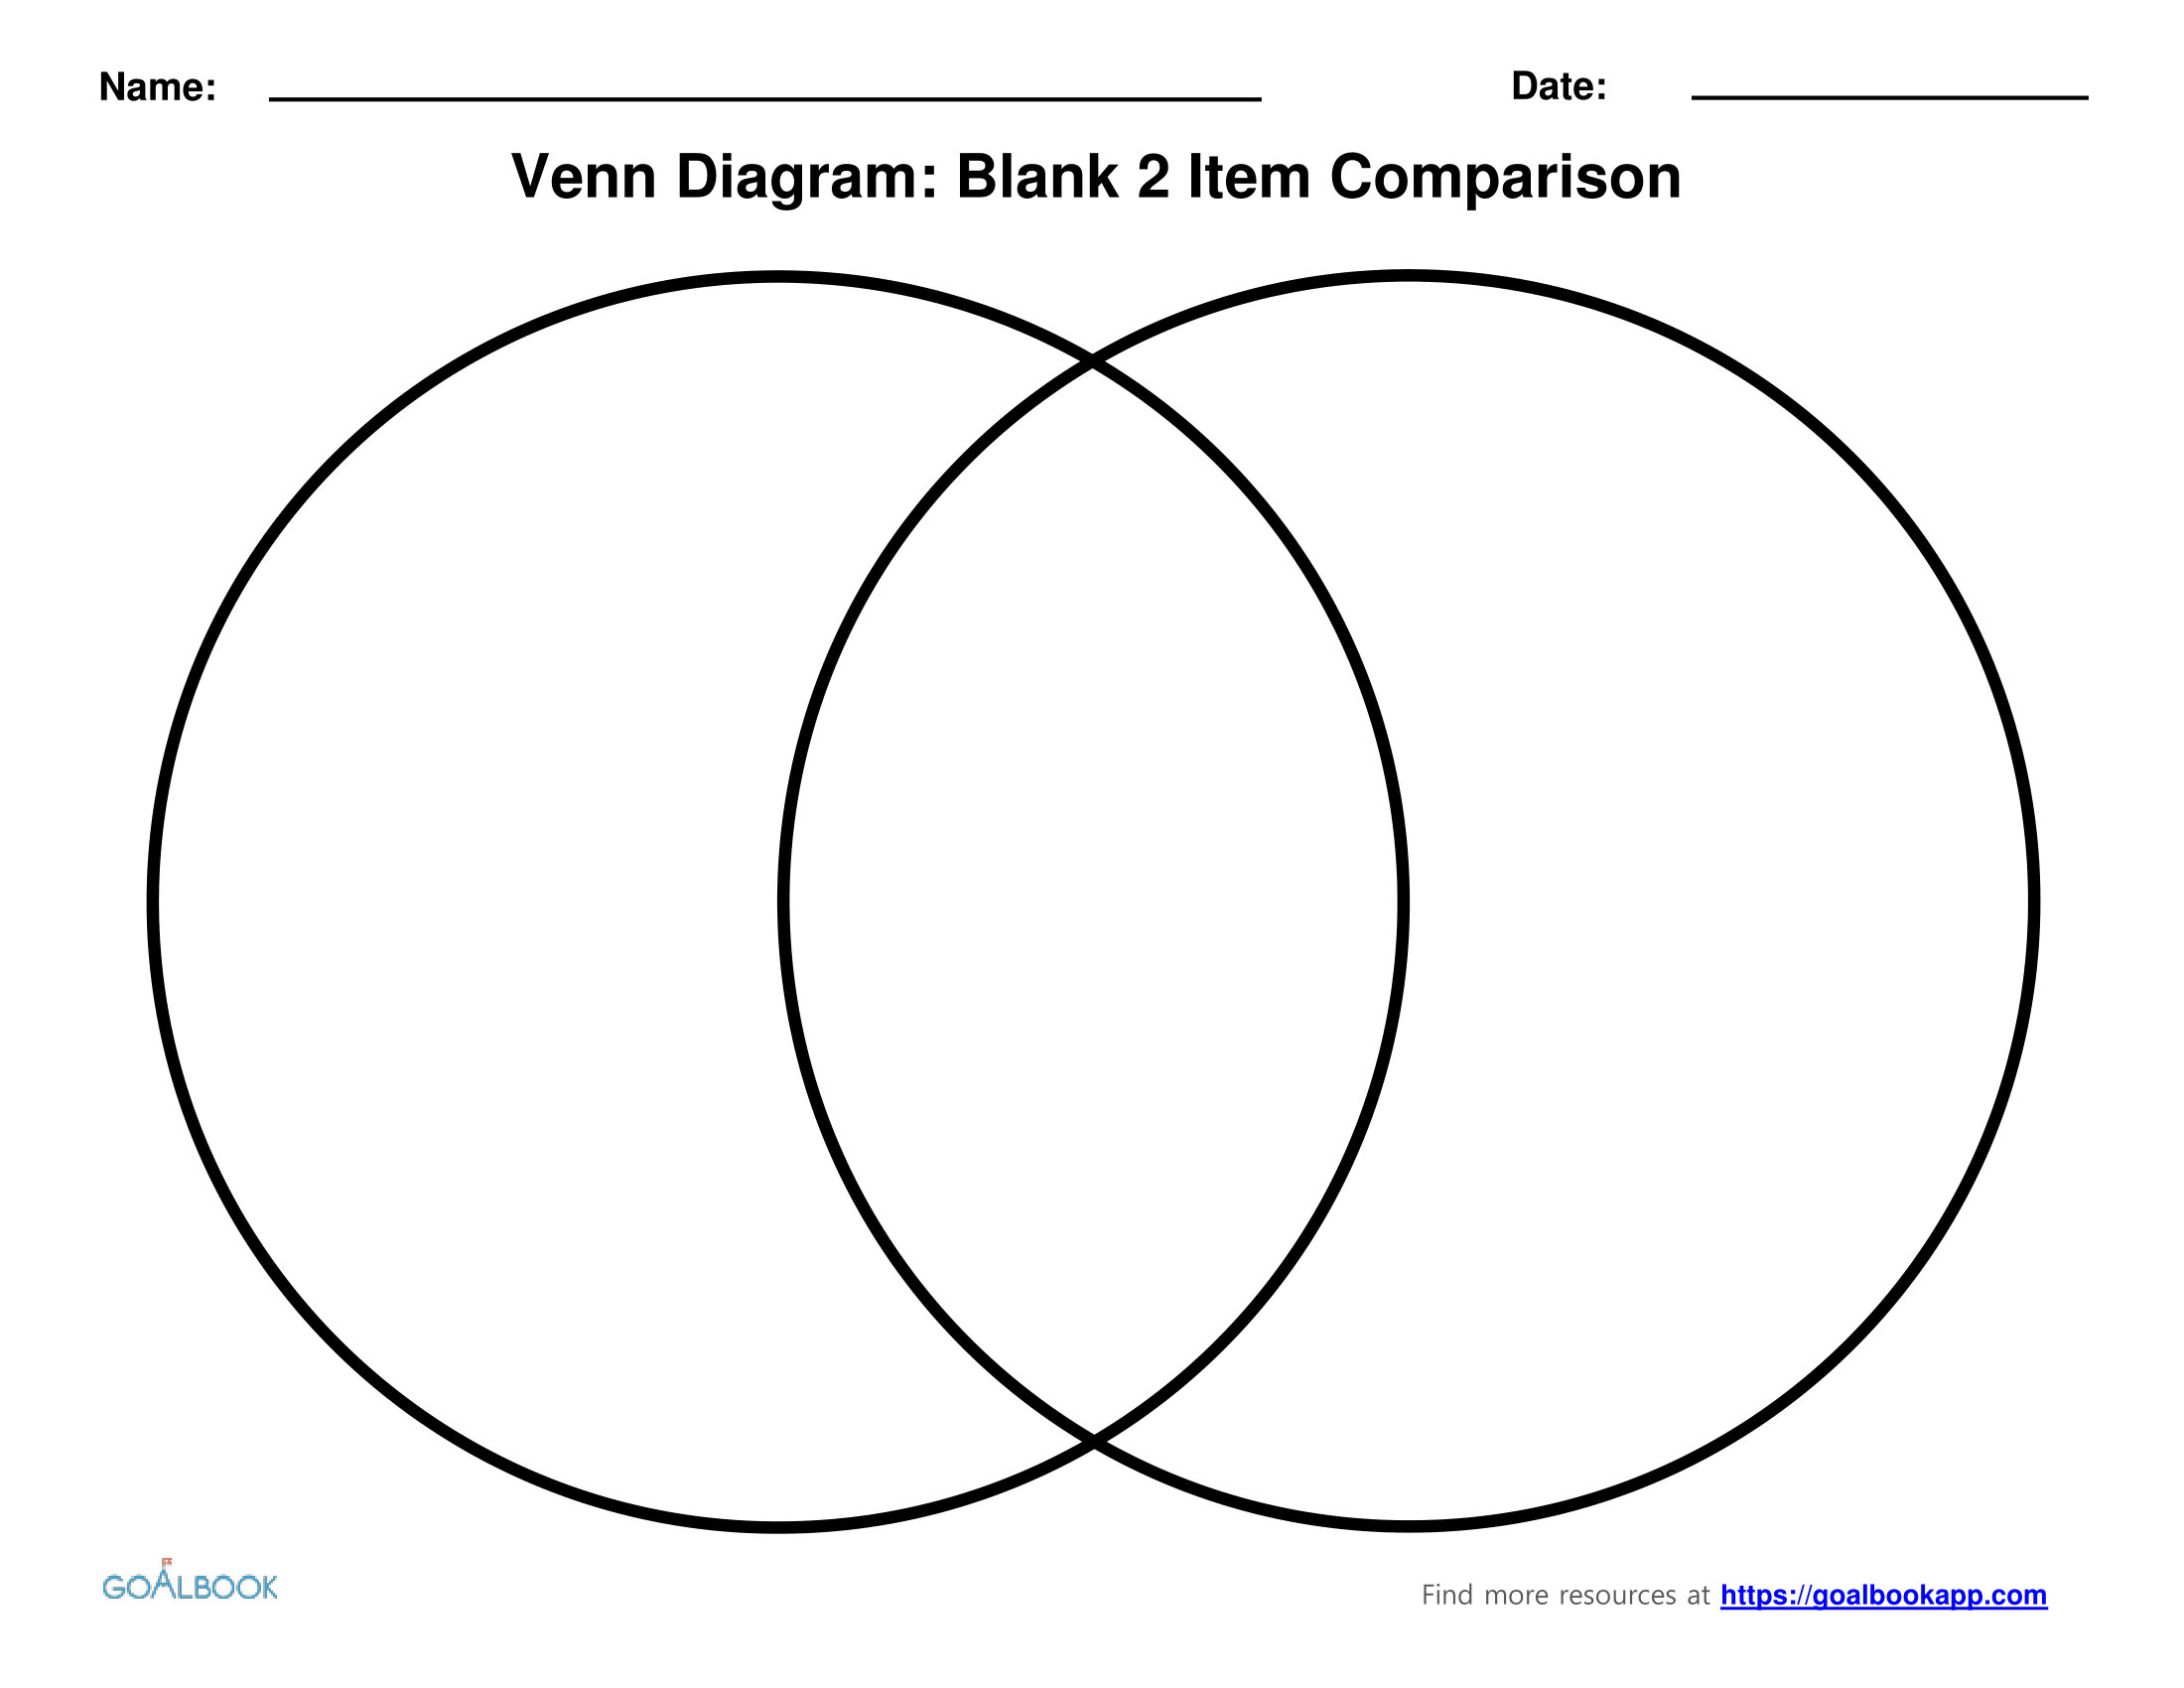 What Is A Venn Diagram Venn Diagram Udl Strategies Goalbook Toolkit